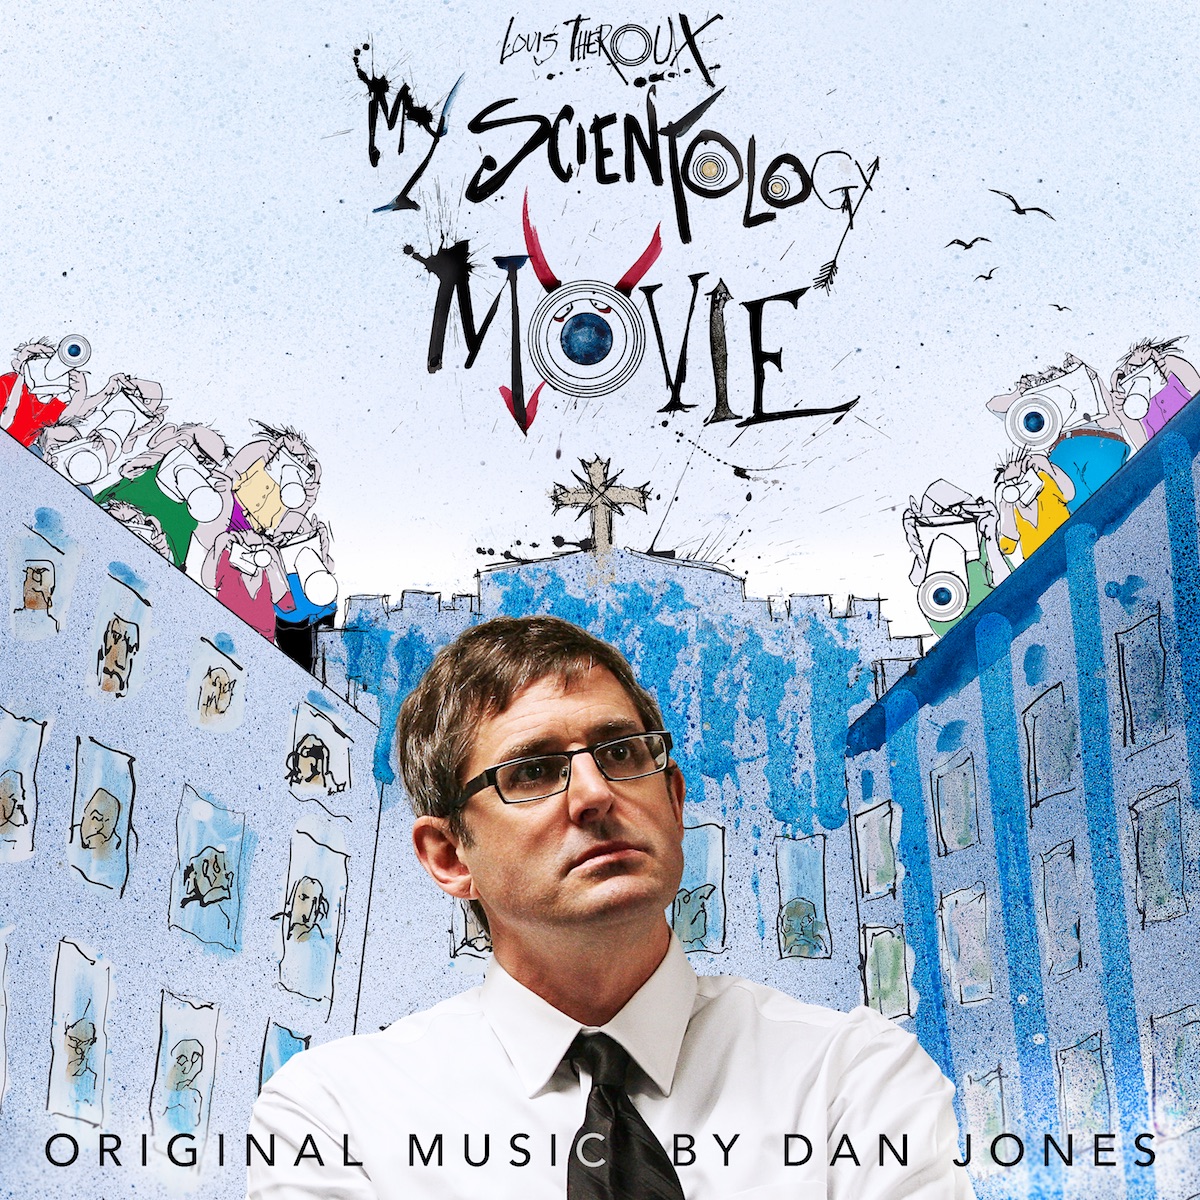 My Scientology Movie soundtrack by Dan Jones